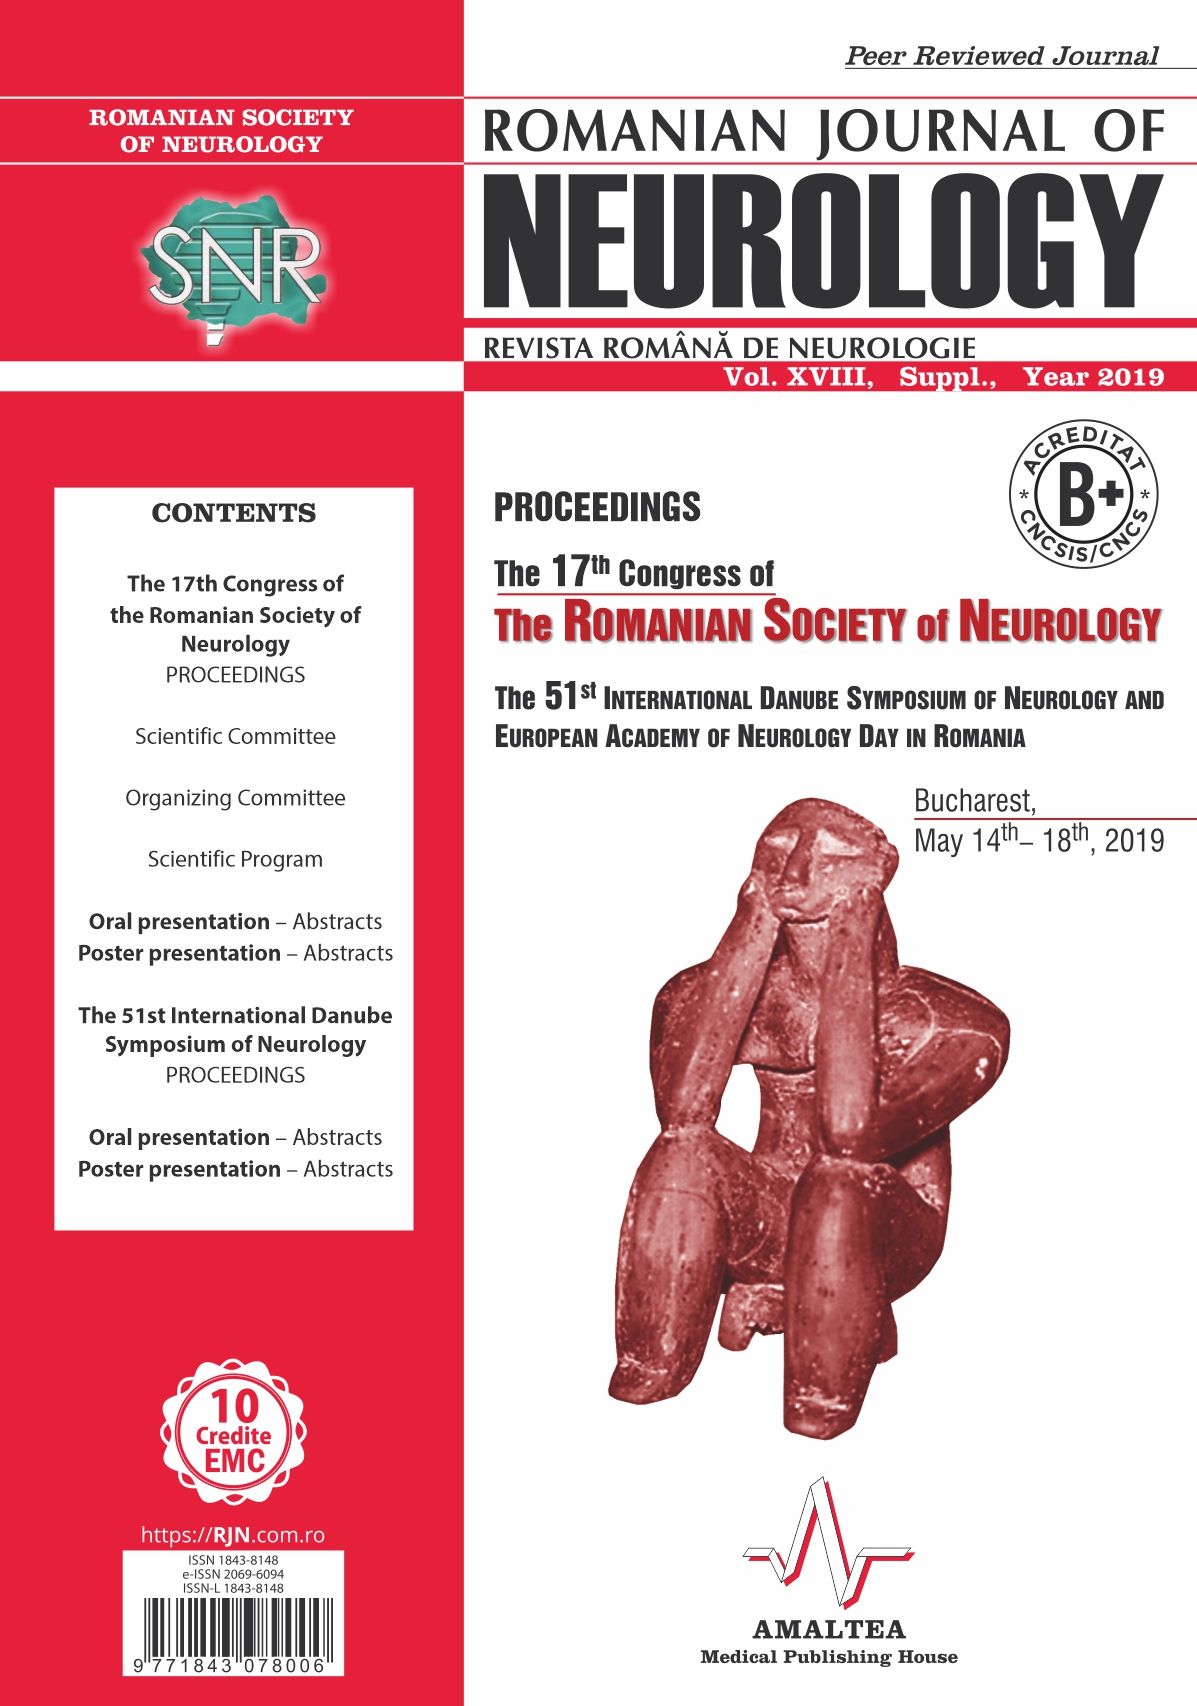 Romanian Journal of Neurology, Volume XVIII, Suppl., 2019